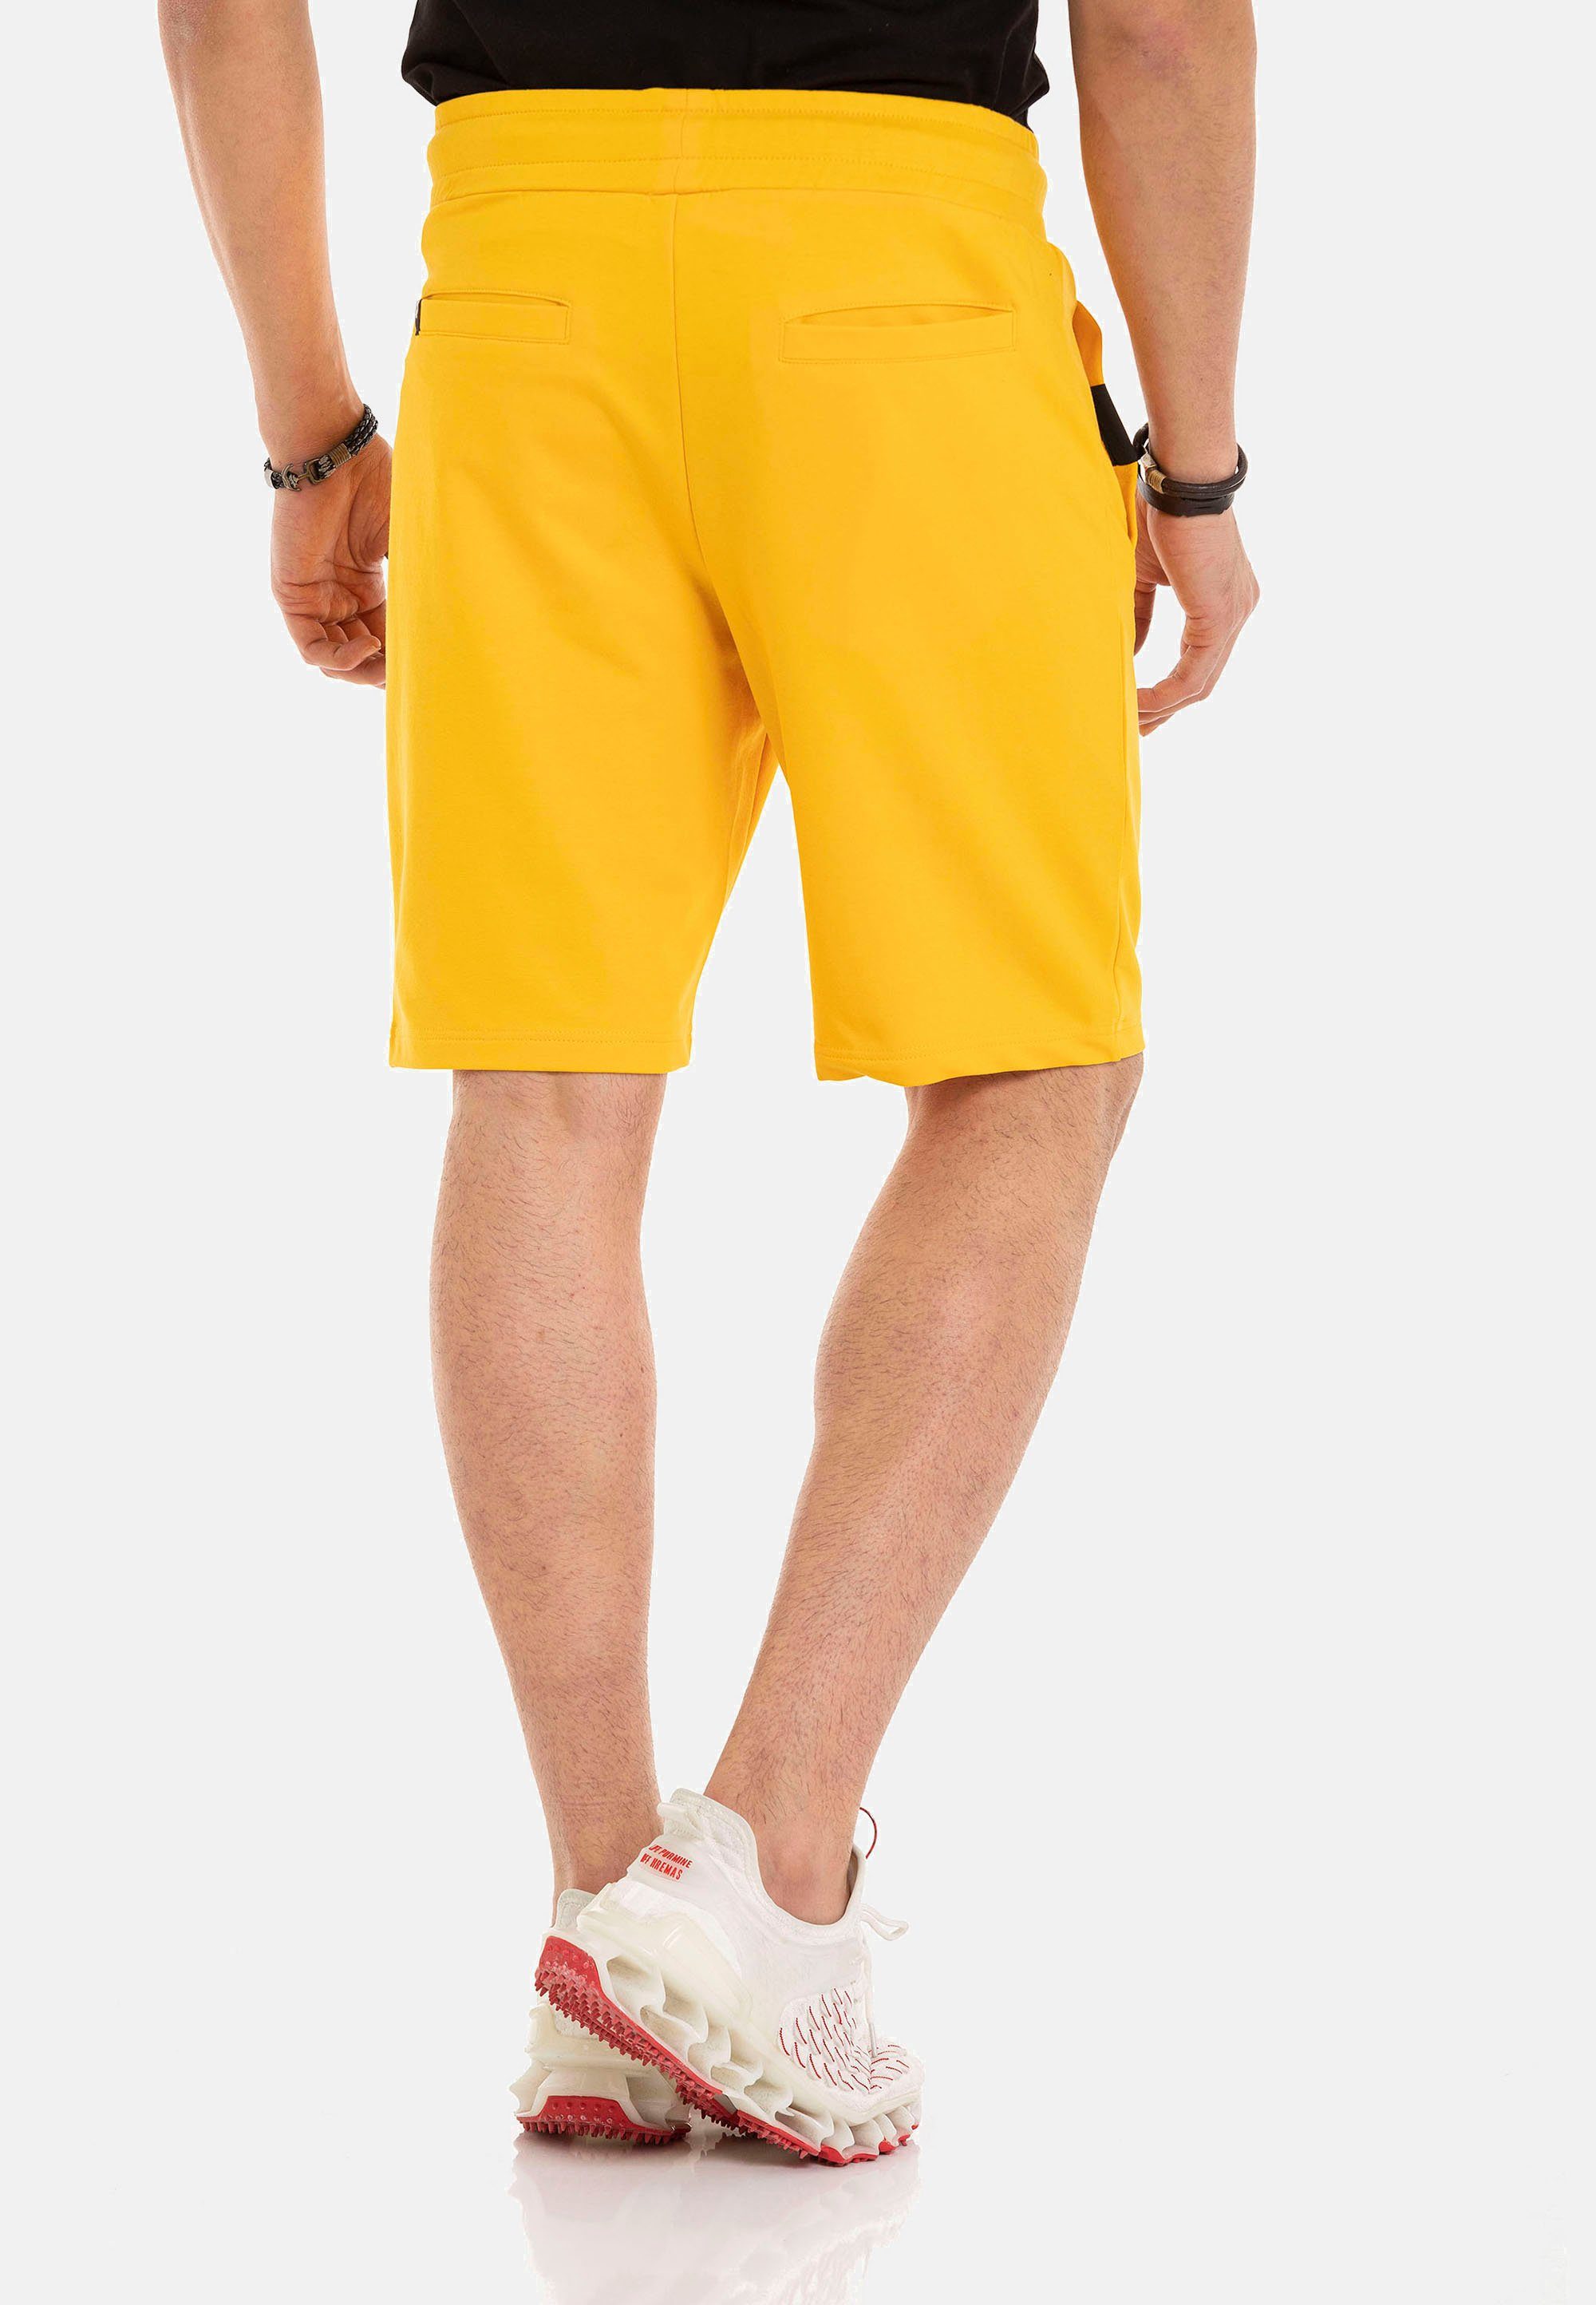 Cipo & Baxx Shorts in sportlichem gelb Look